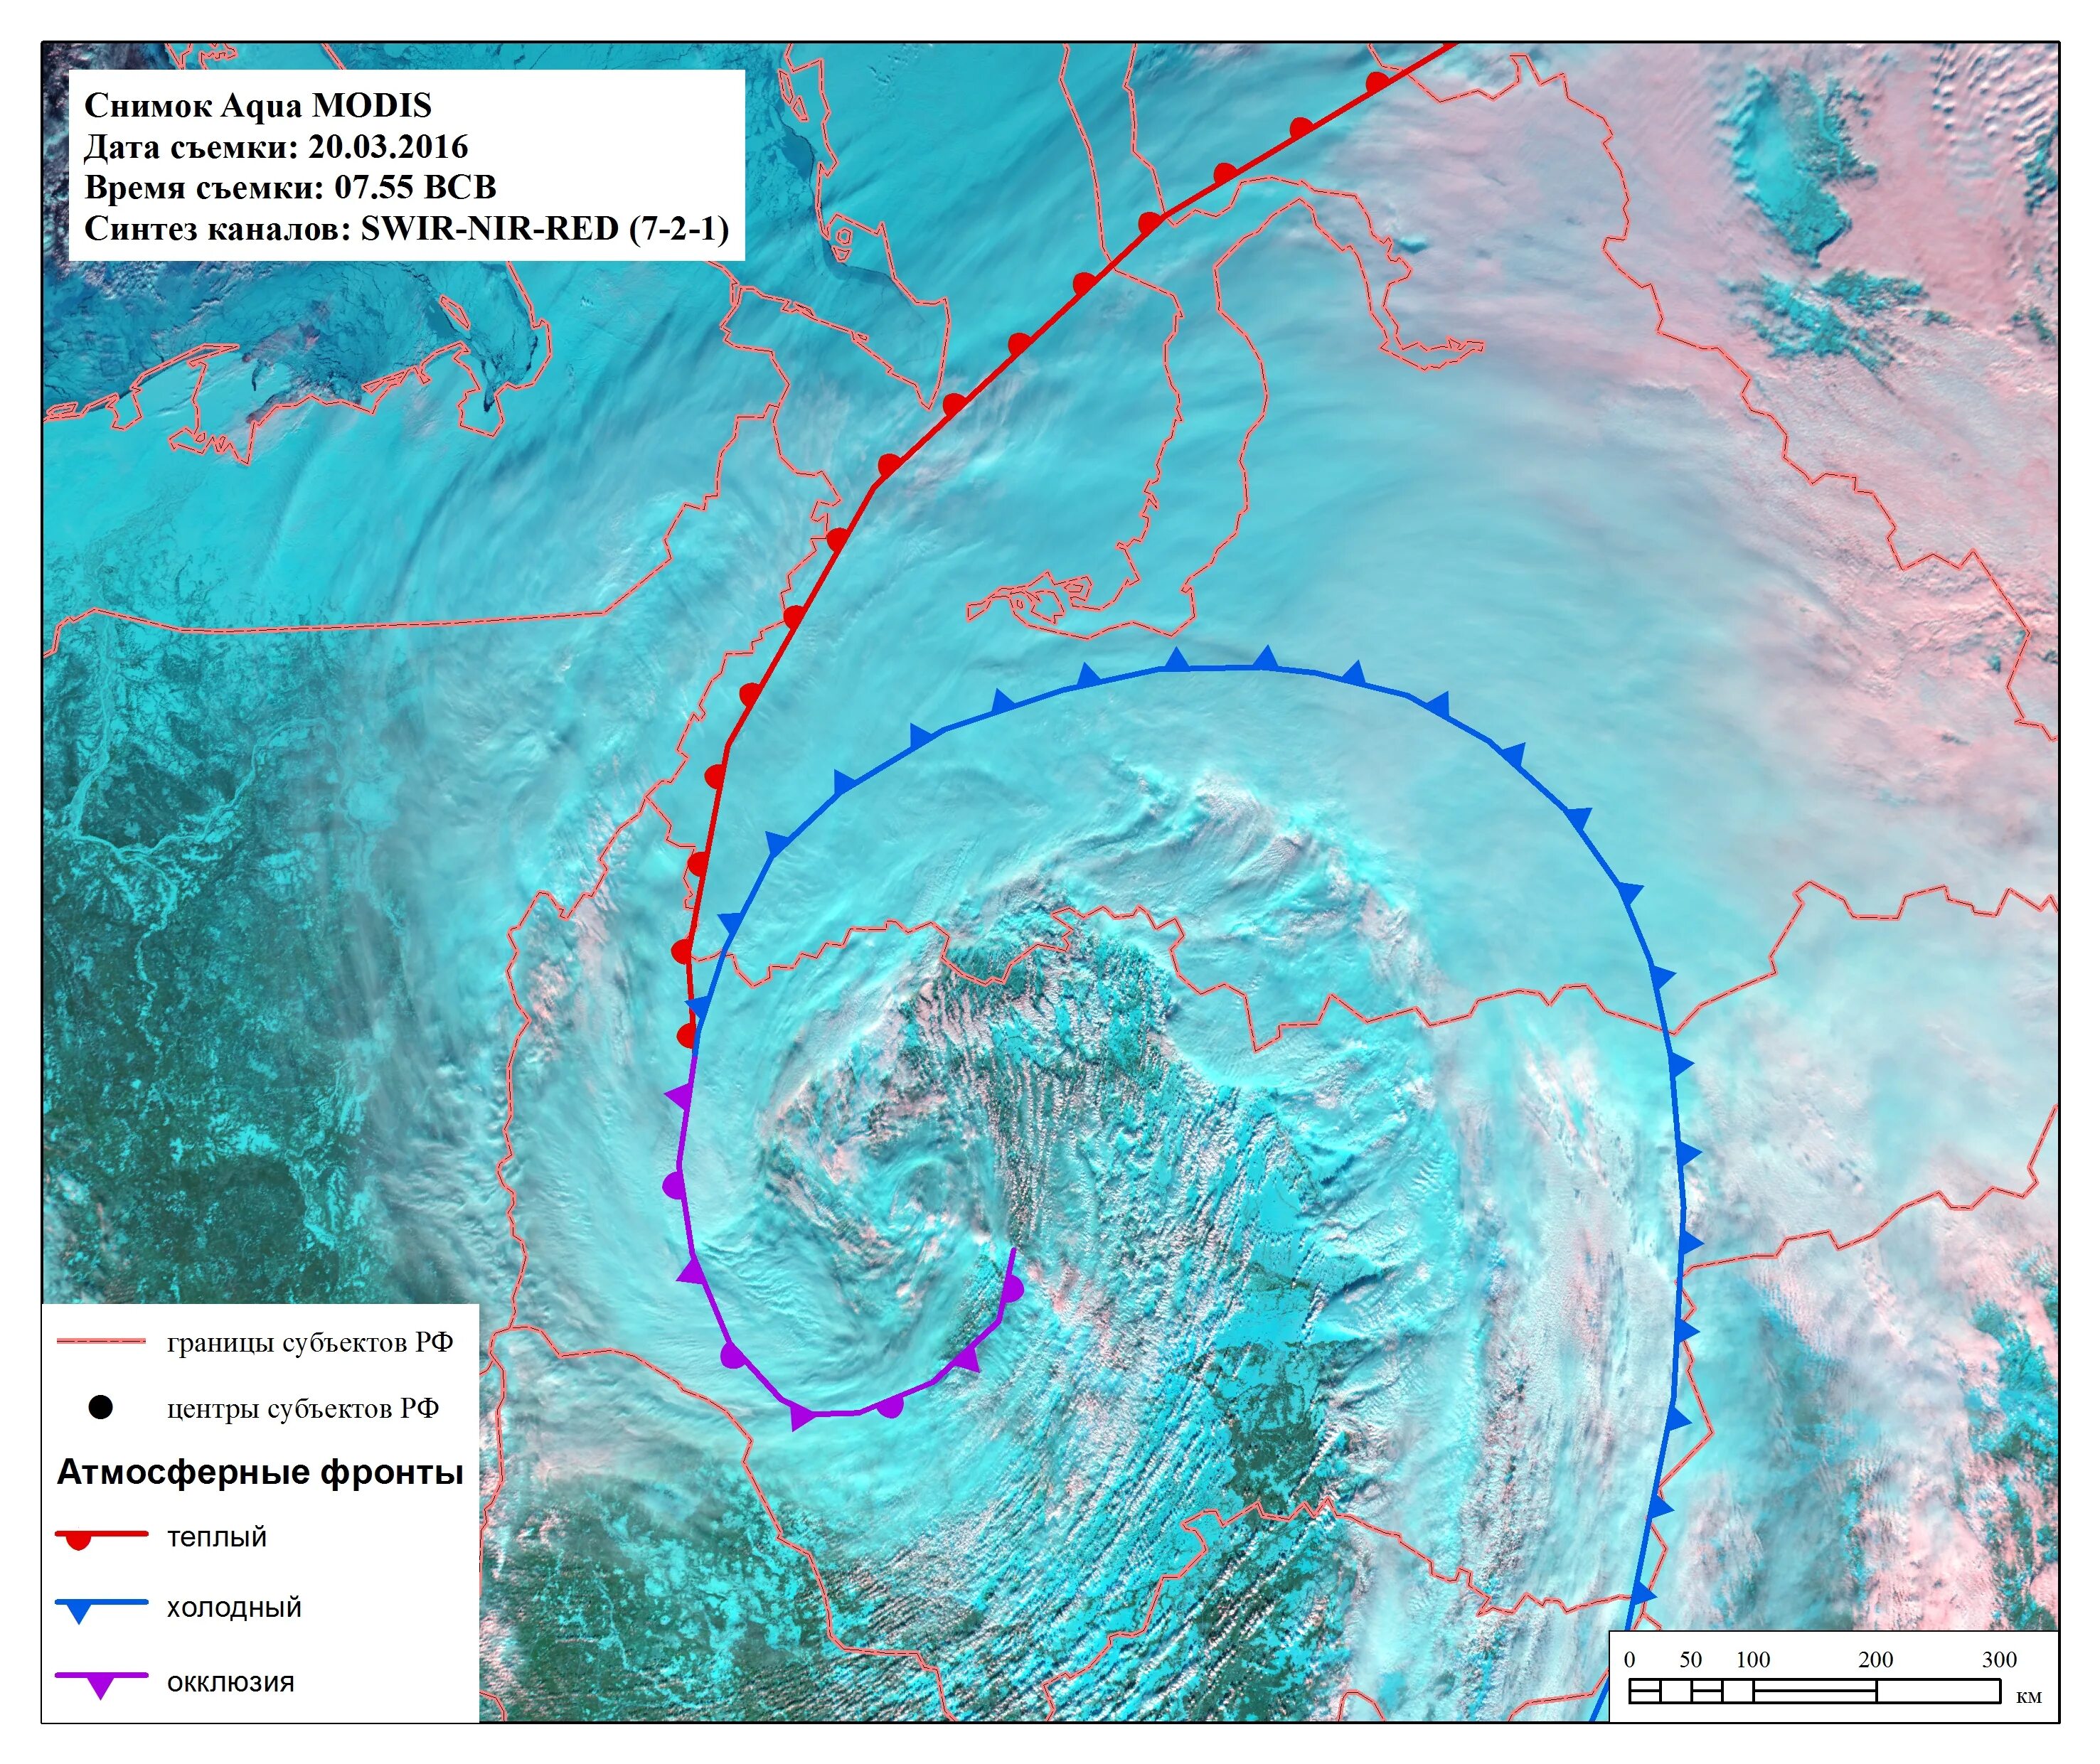 Теплый фронт циклона. Циклон на спутниковом снимке. Циклоны и антициклоны на спутниковых снимках. Циклон над Сибирью. Циклон Спутник снимок.